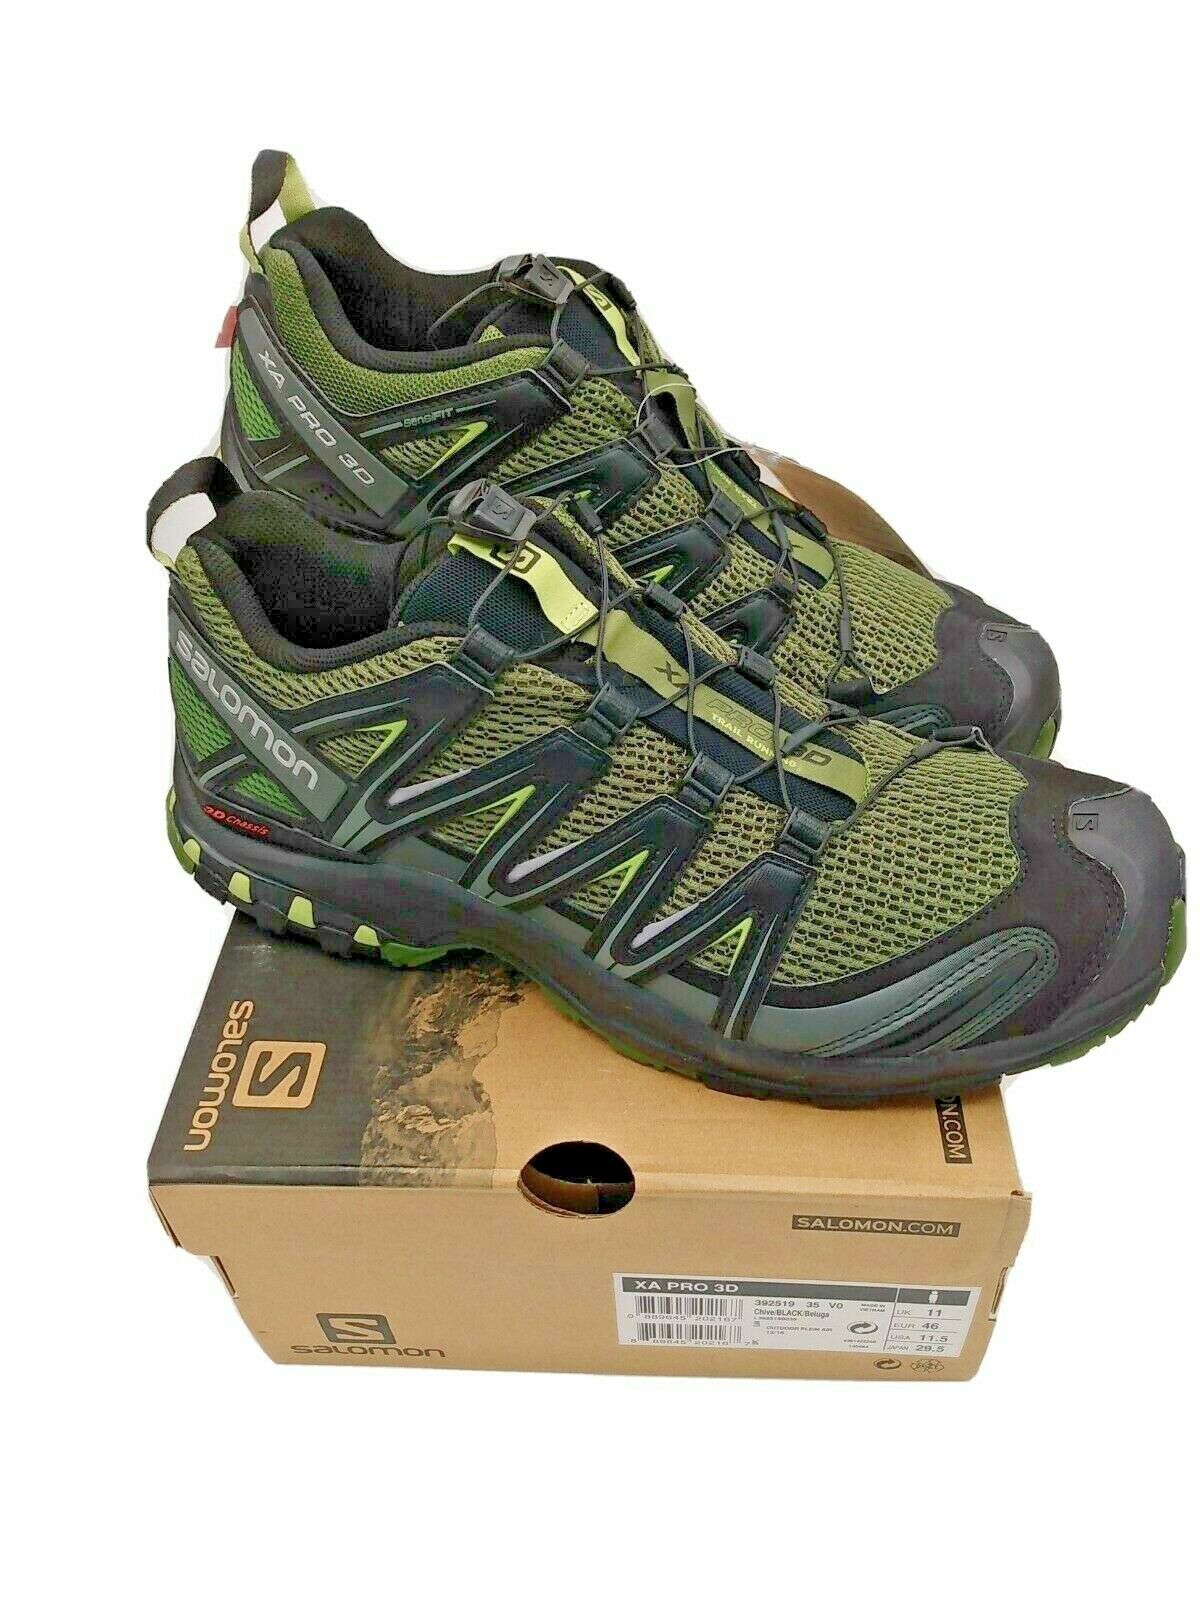 Salomon XA Pro 3D V8 Green Black Trail Running Hiking Shoes Men's Size 11